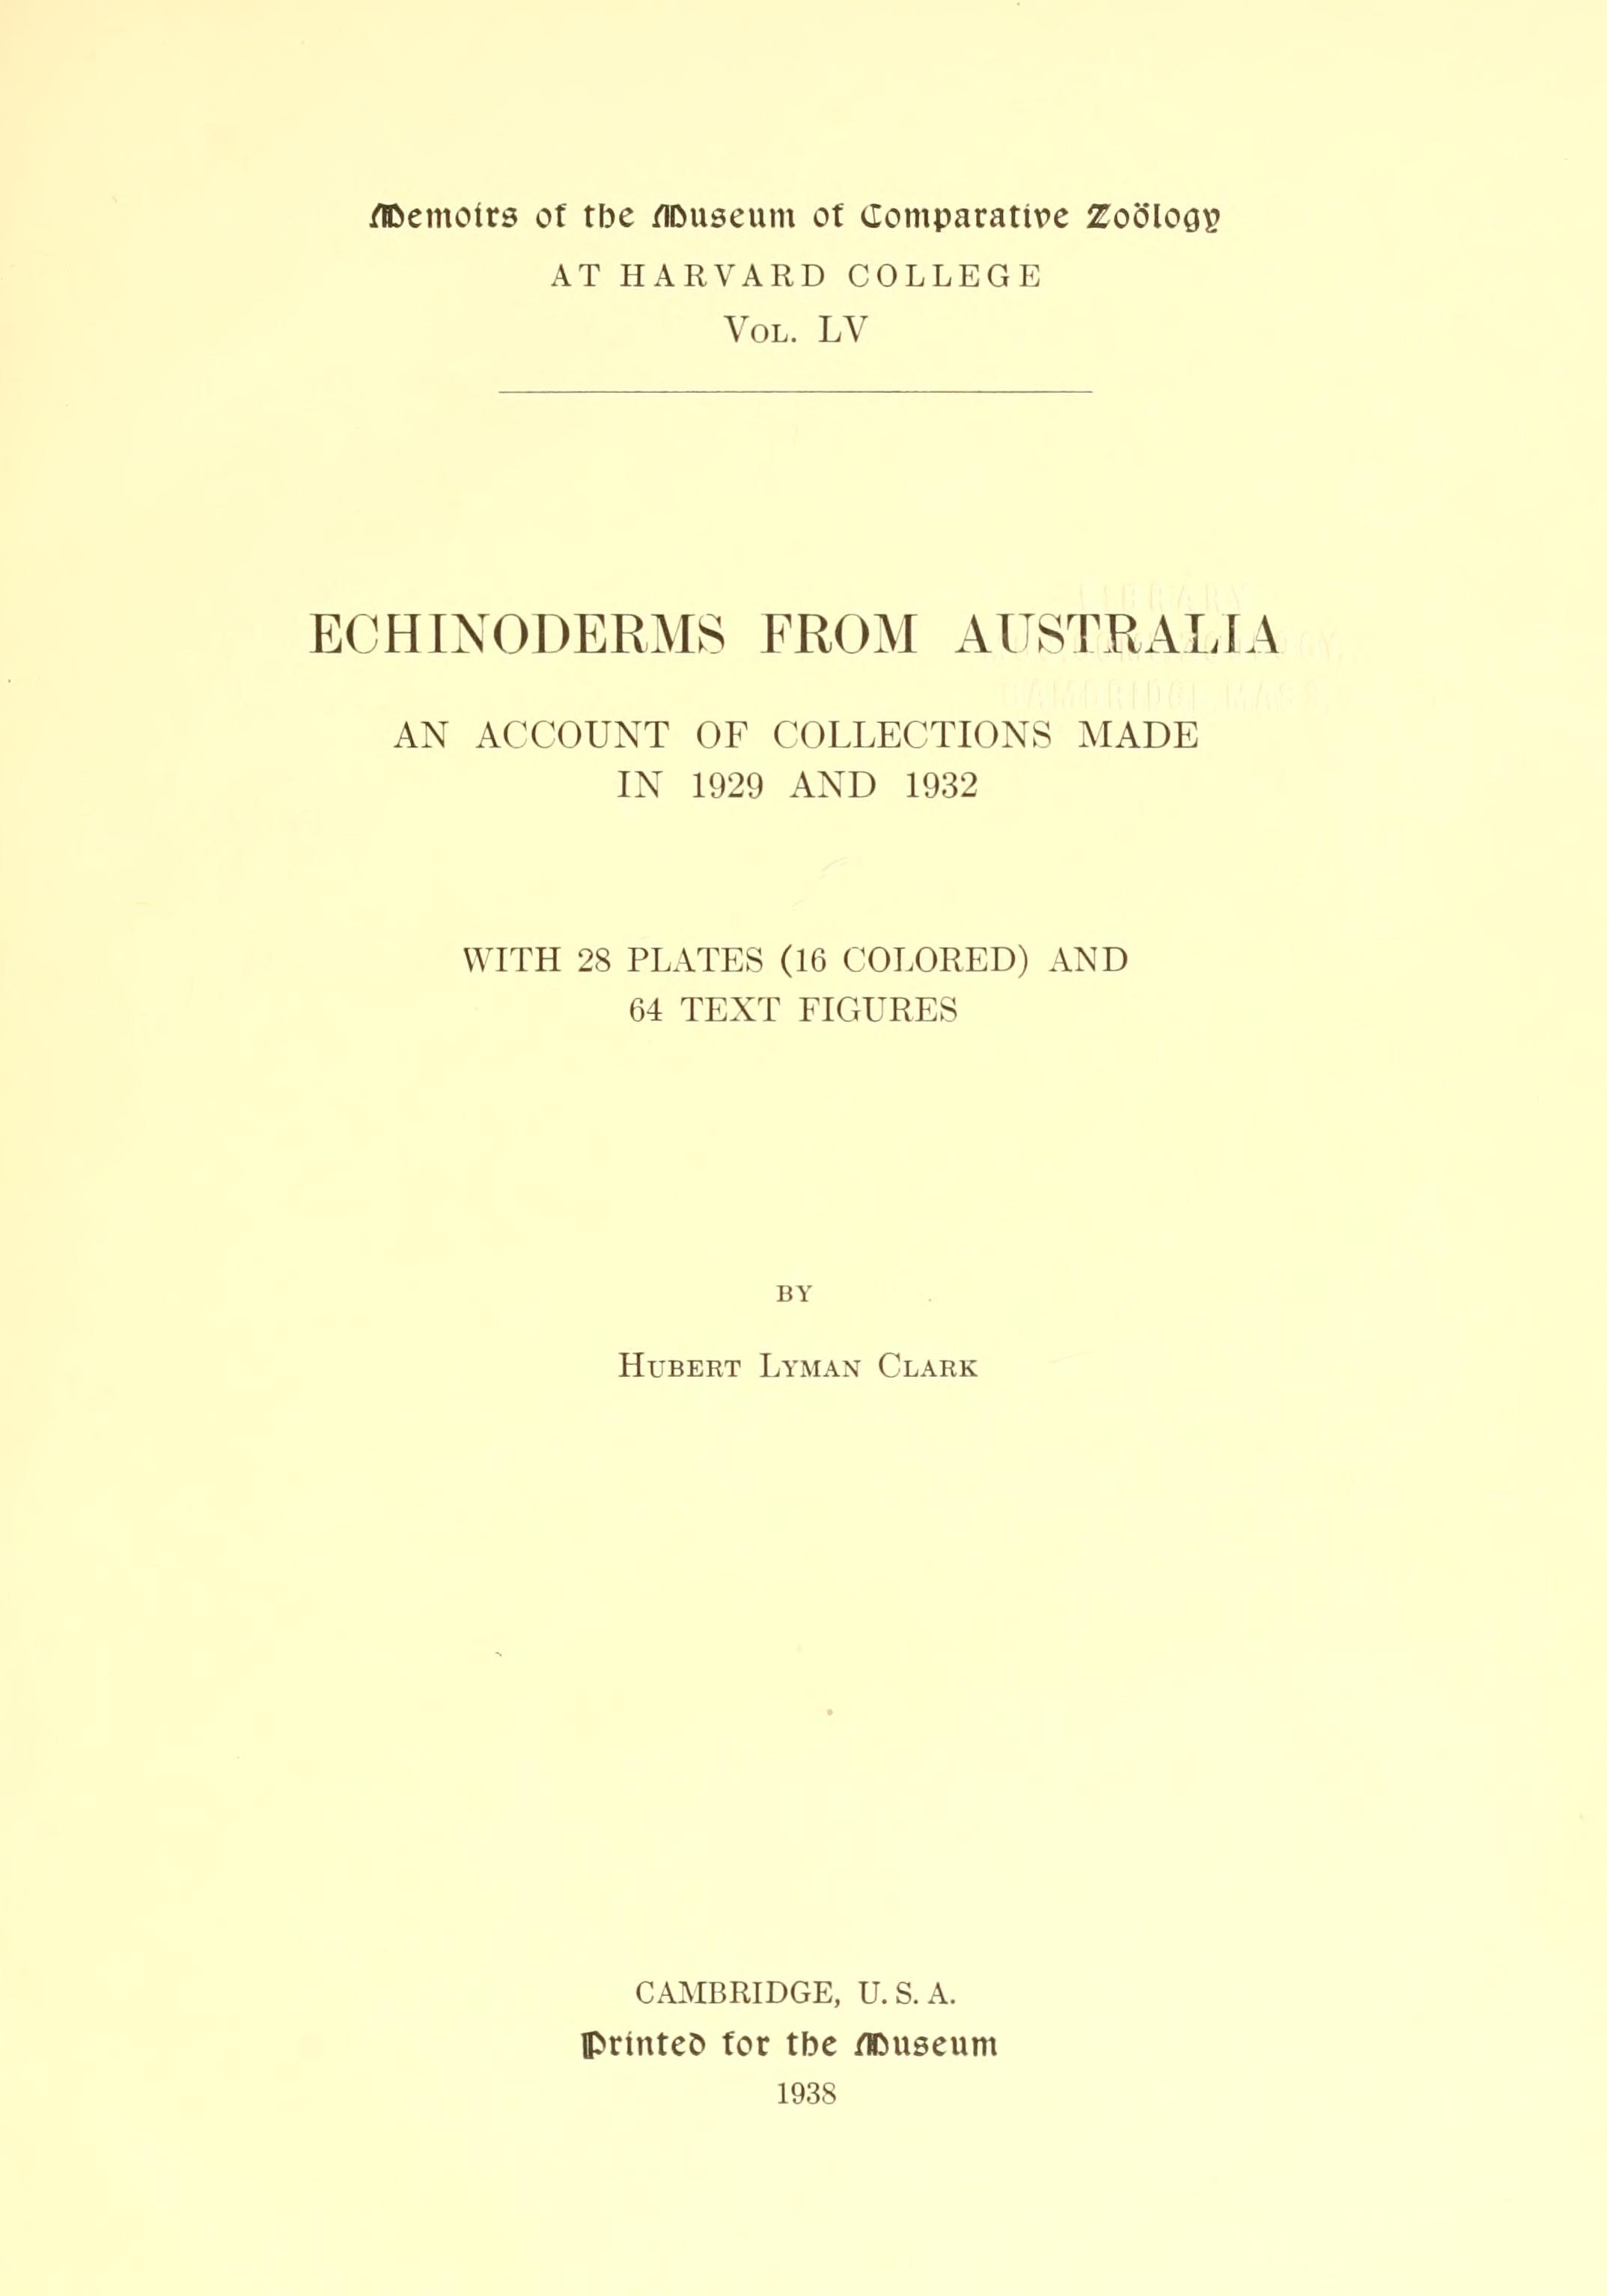 Media of type text, Clark 1938. Description:MCZ Memoirs Vol. LV